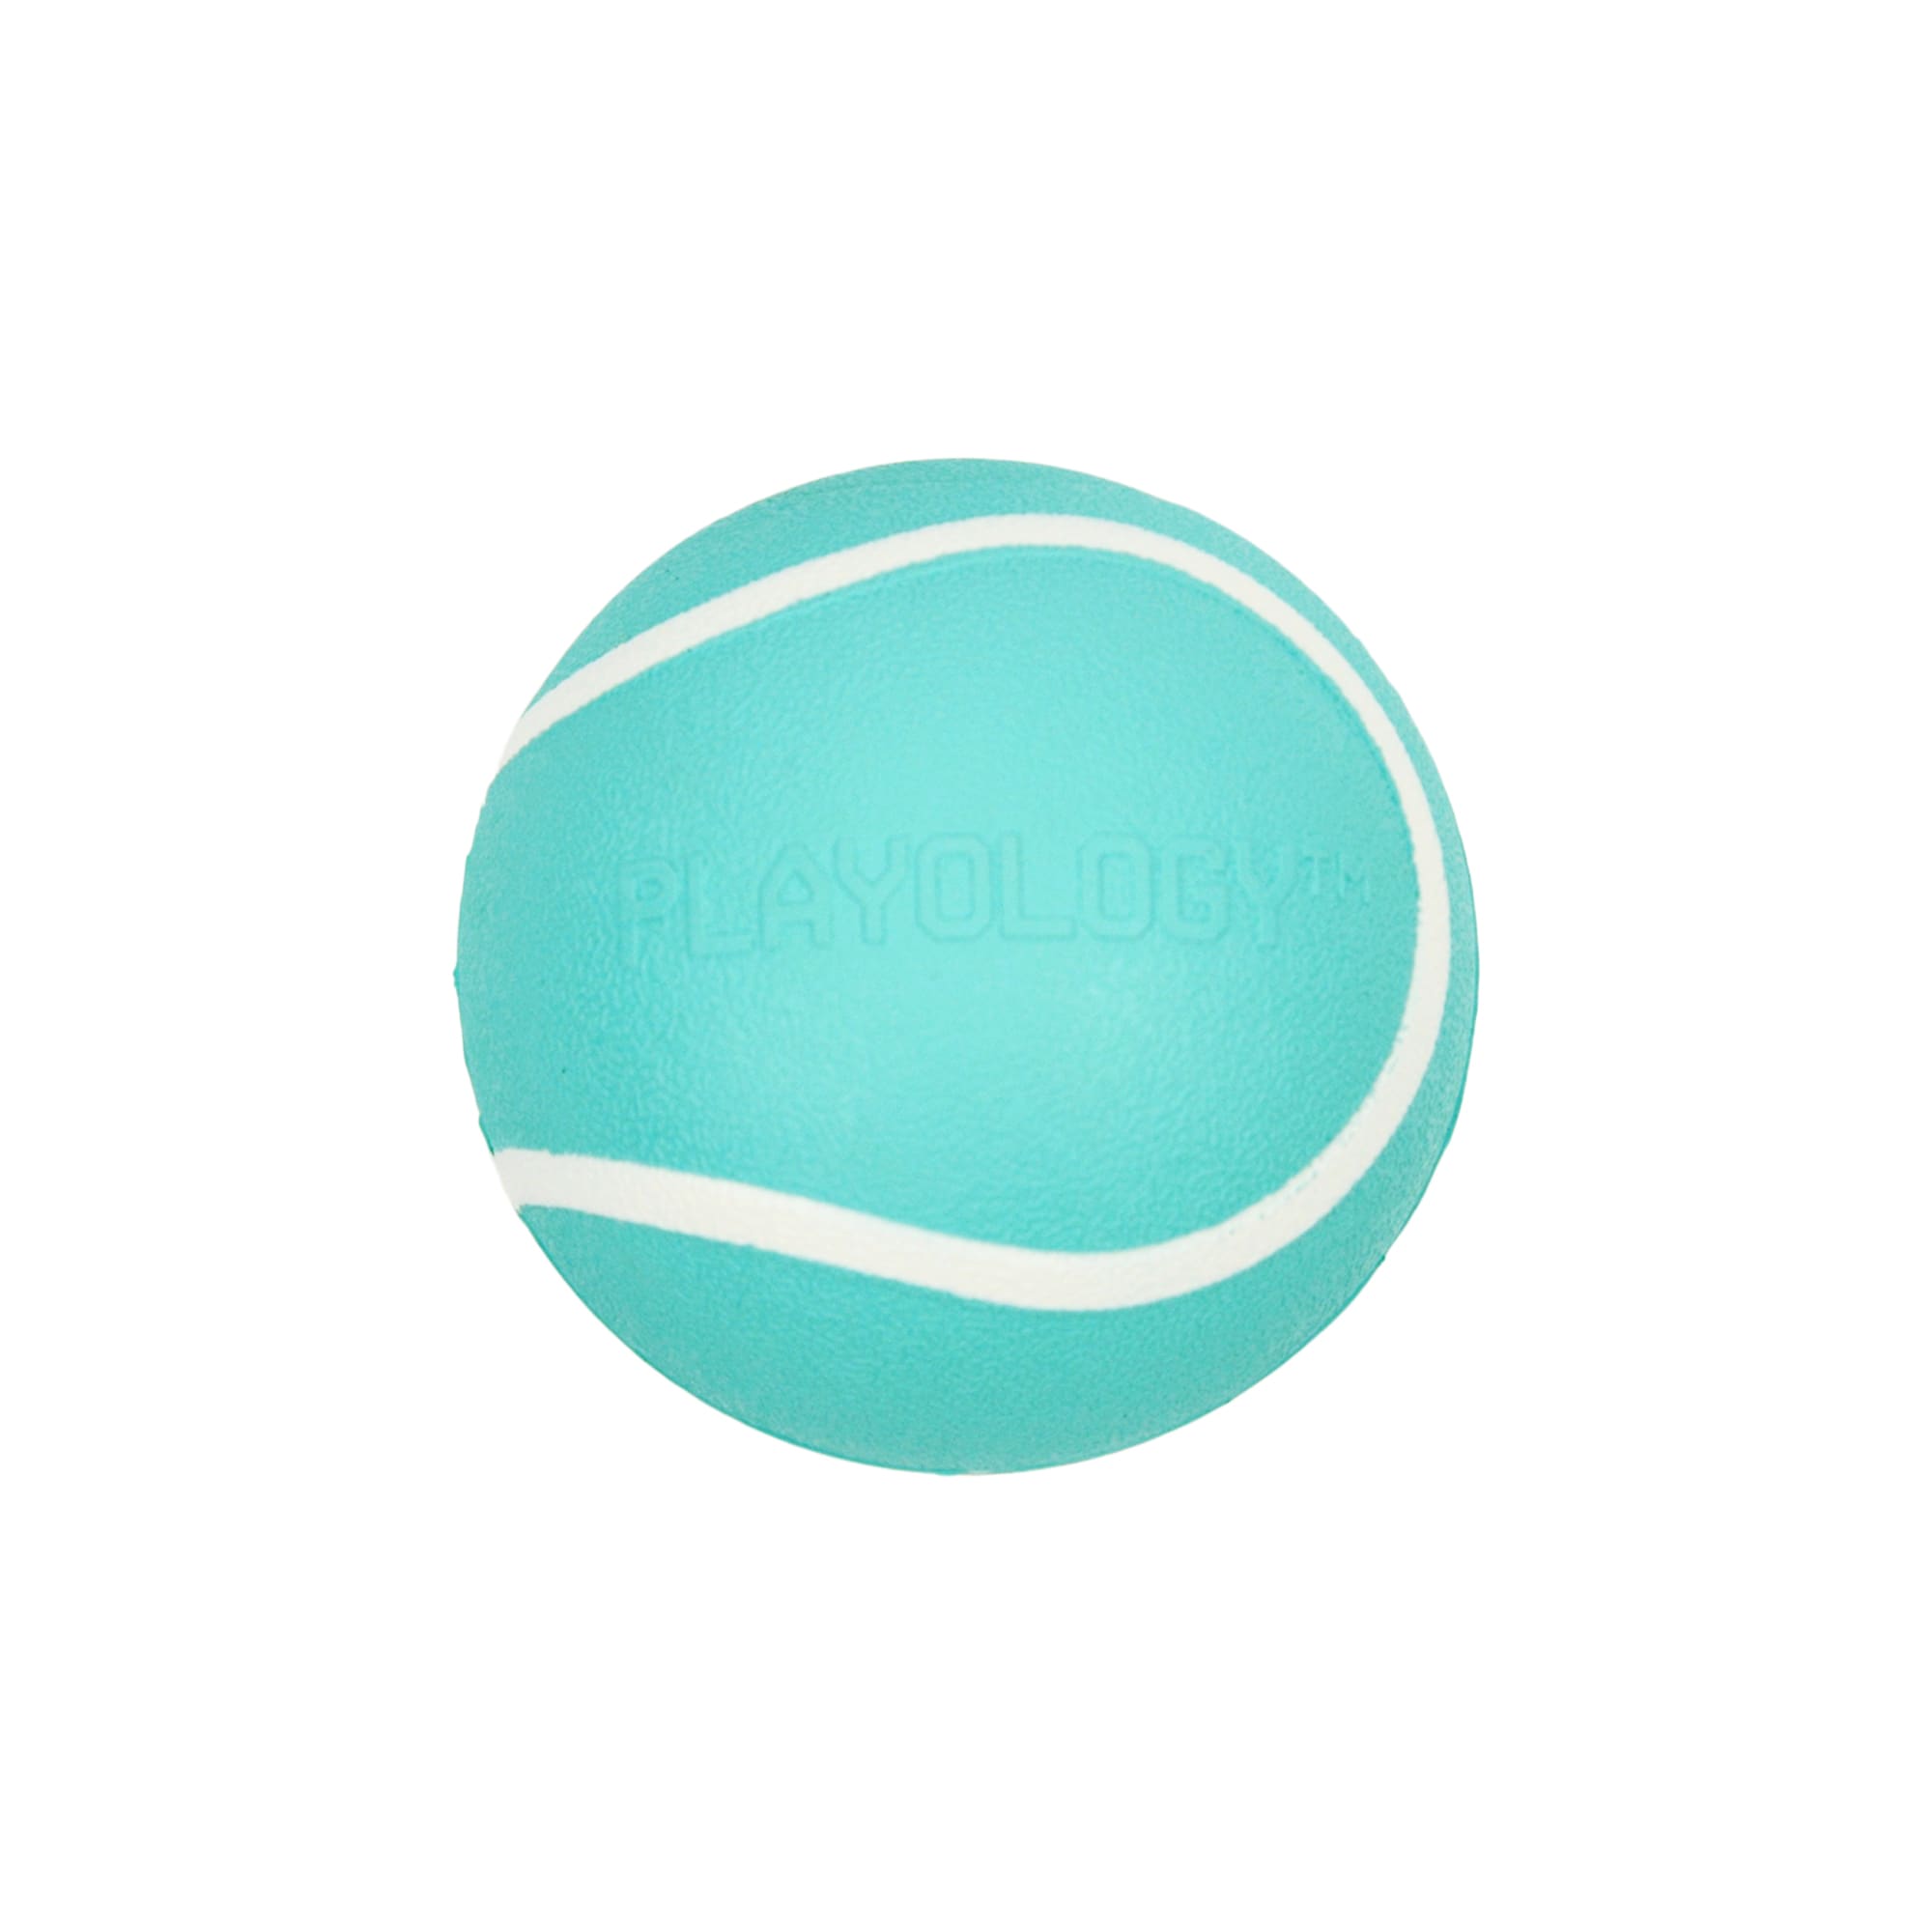 playology ball